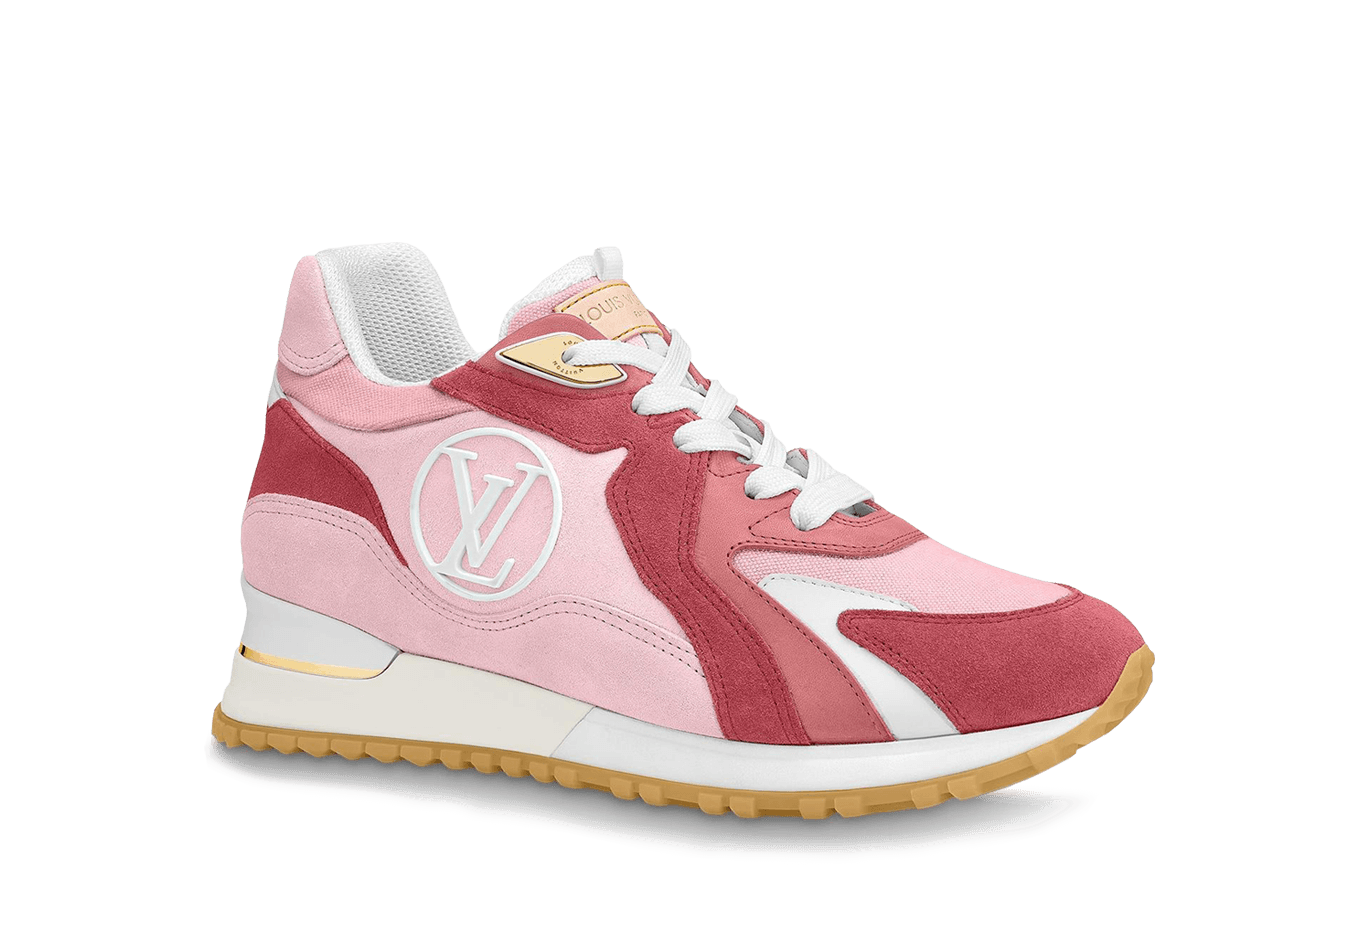 Louis Vuitton     Run Away Rose Clair Pink shoes price